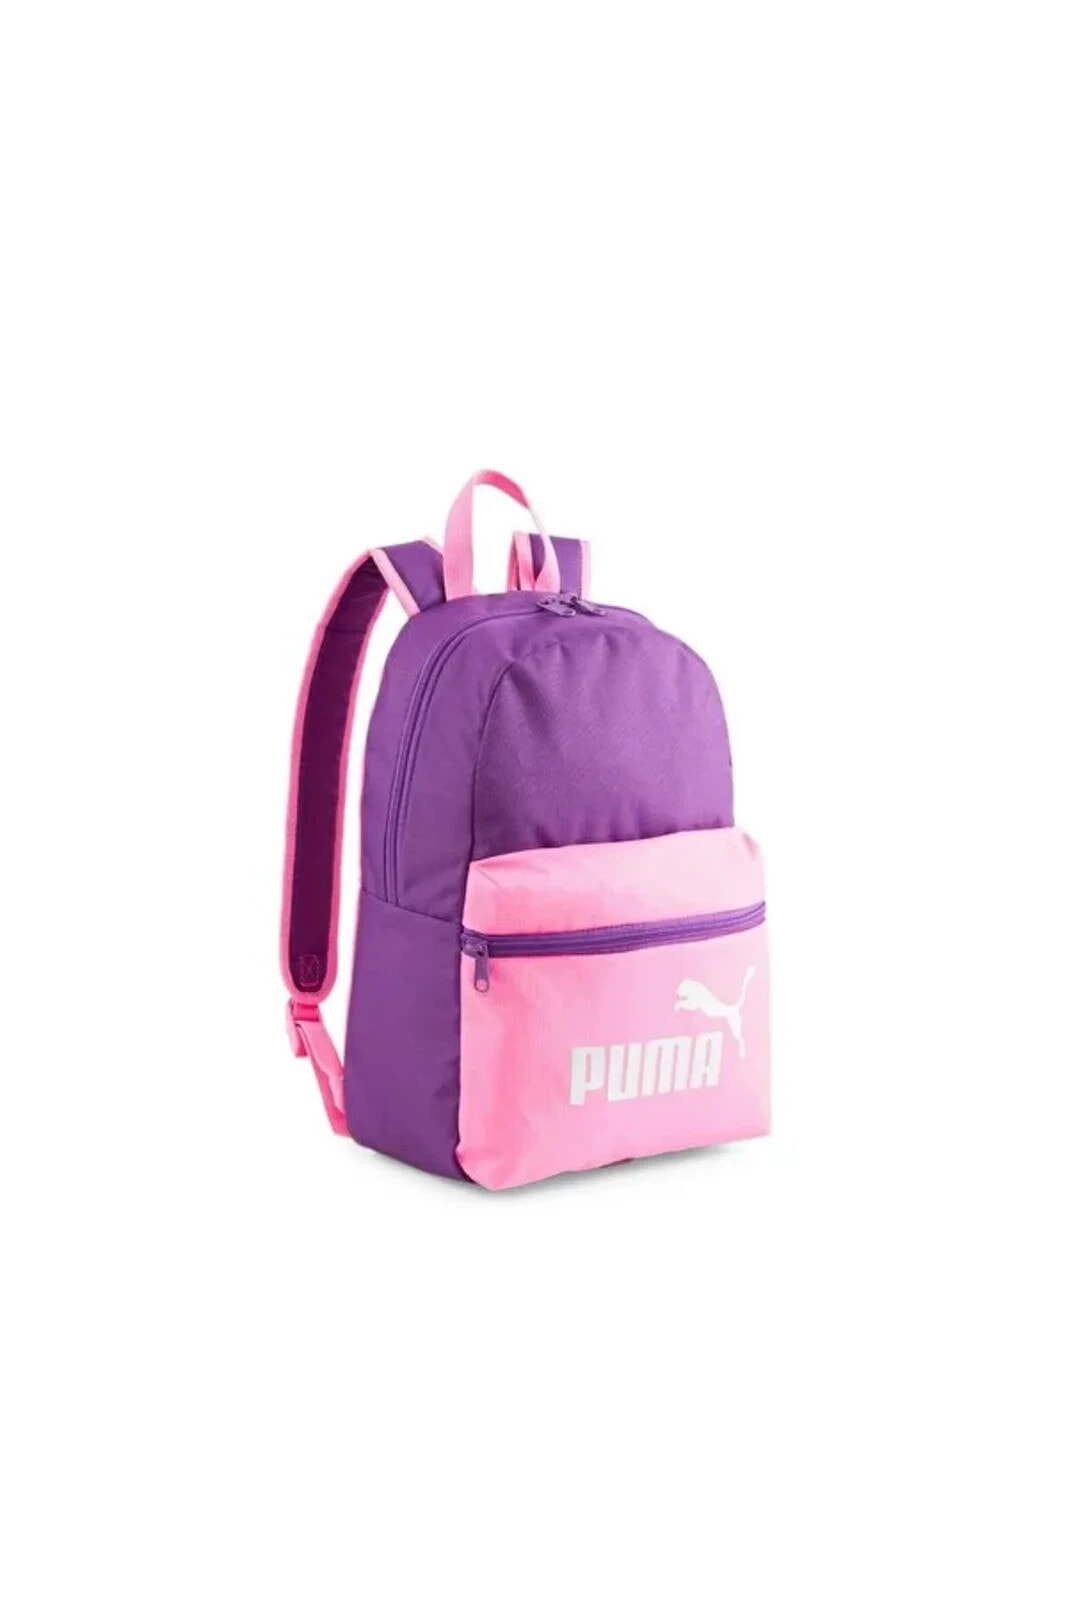 Çanta Puma Phase Small Backpack Lacivert 079879-02